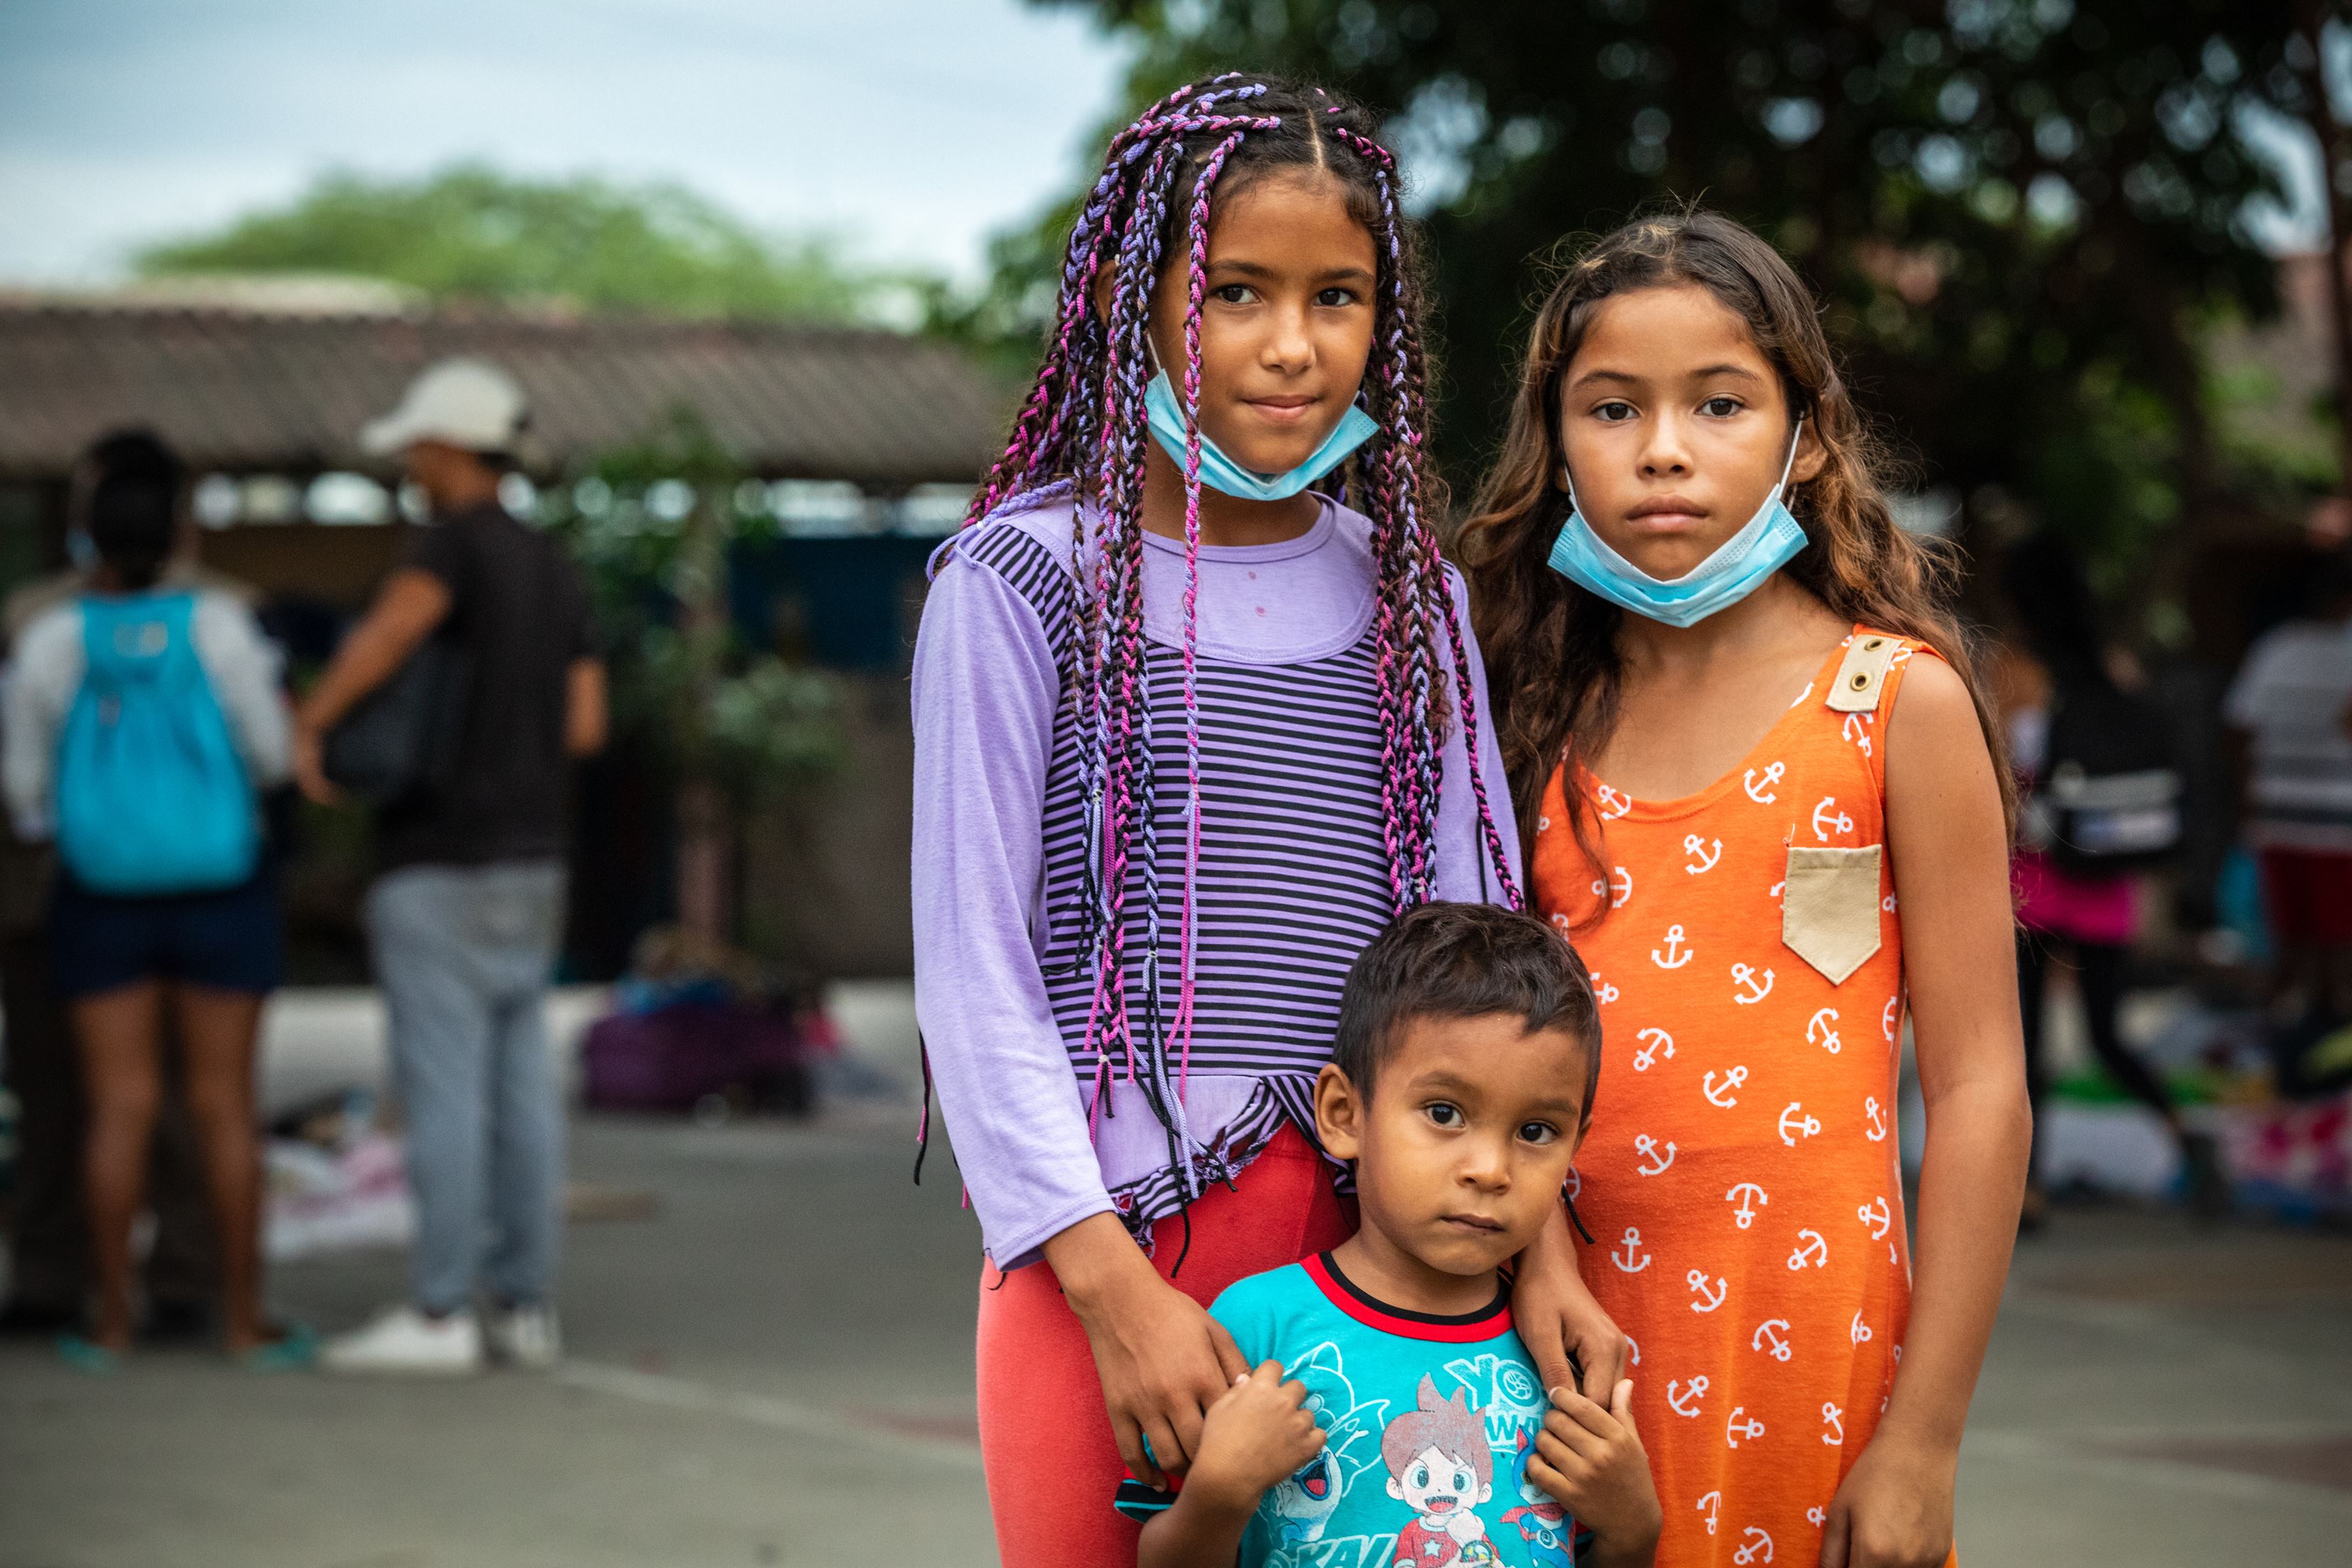 Three refugee children at the Peru-Ecuador border smiling and looking at the camera